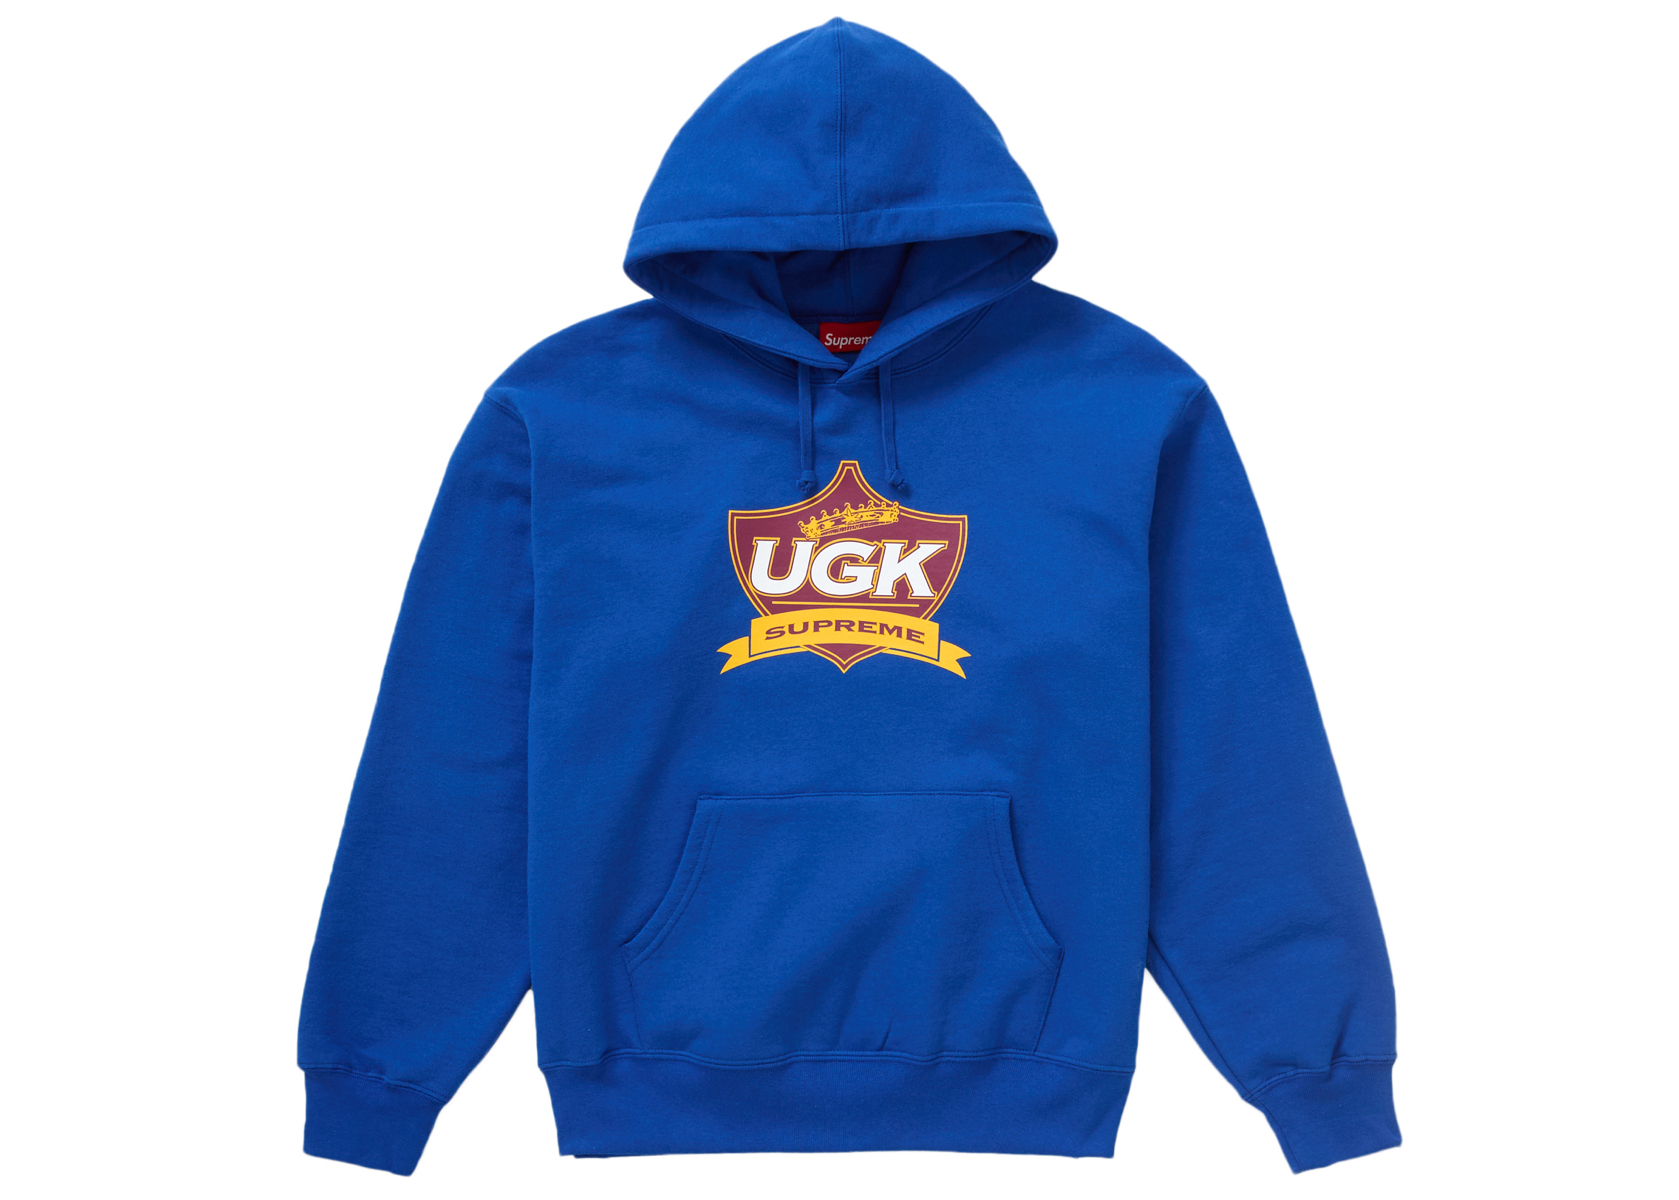 Supreme UGK Hooded Sweatshirt Royal